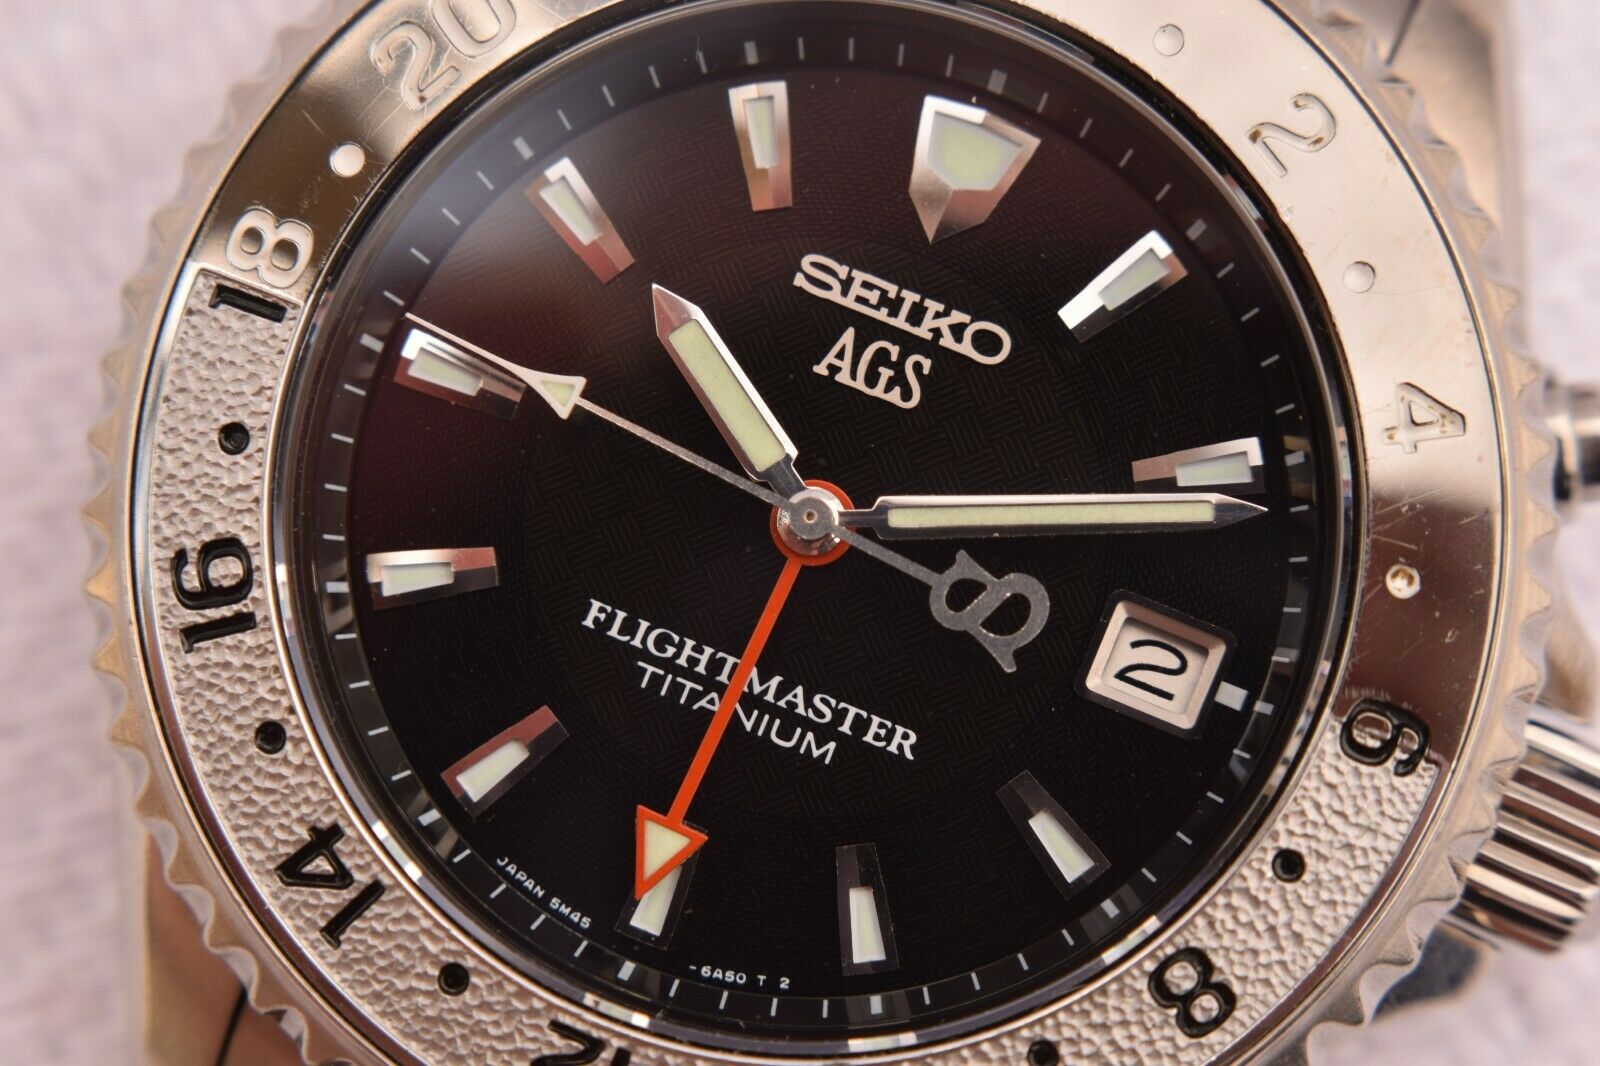 Seiko AGS Kinetic Flightmaster 5M45-6A50 GMT Titanium Pilot Watch SBCW005  1996 | WatchCharts